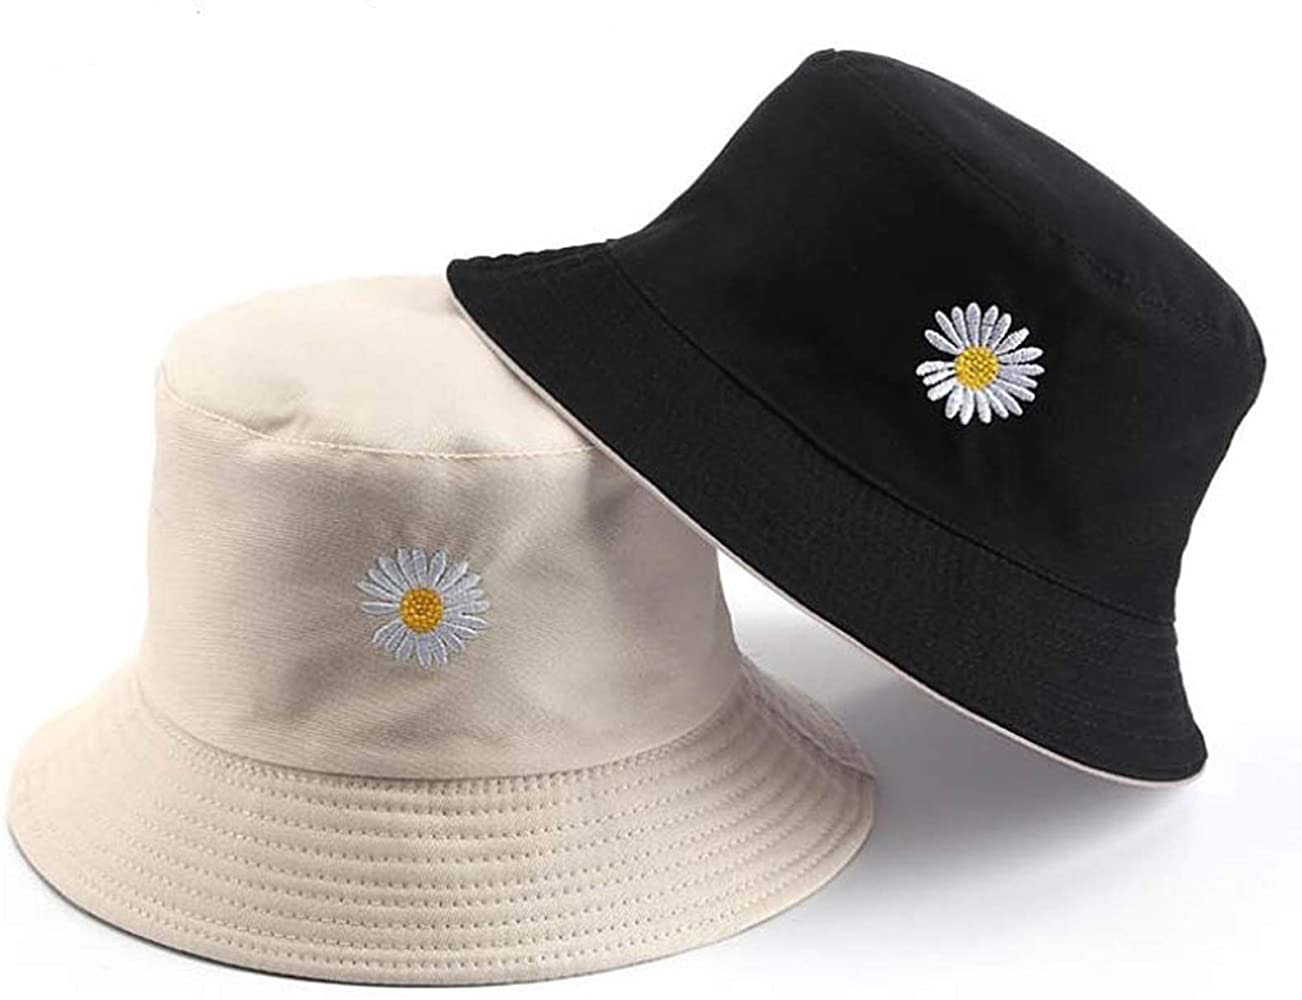 Daisy-Bucket-Hats Reversible Fisherman-Cap Packable Summer Sun Protection (Beige/Black 1pc) 小雏菊双面渔夫帽